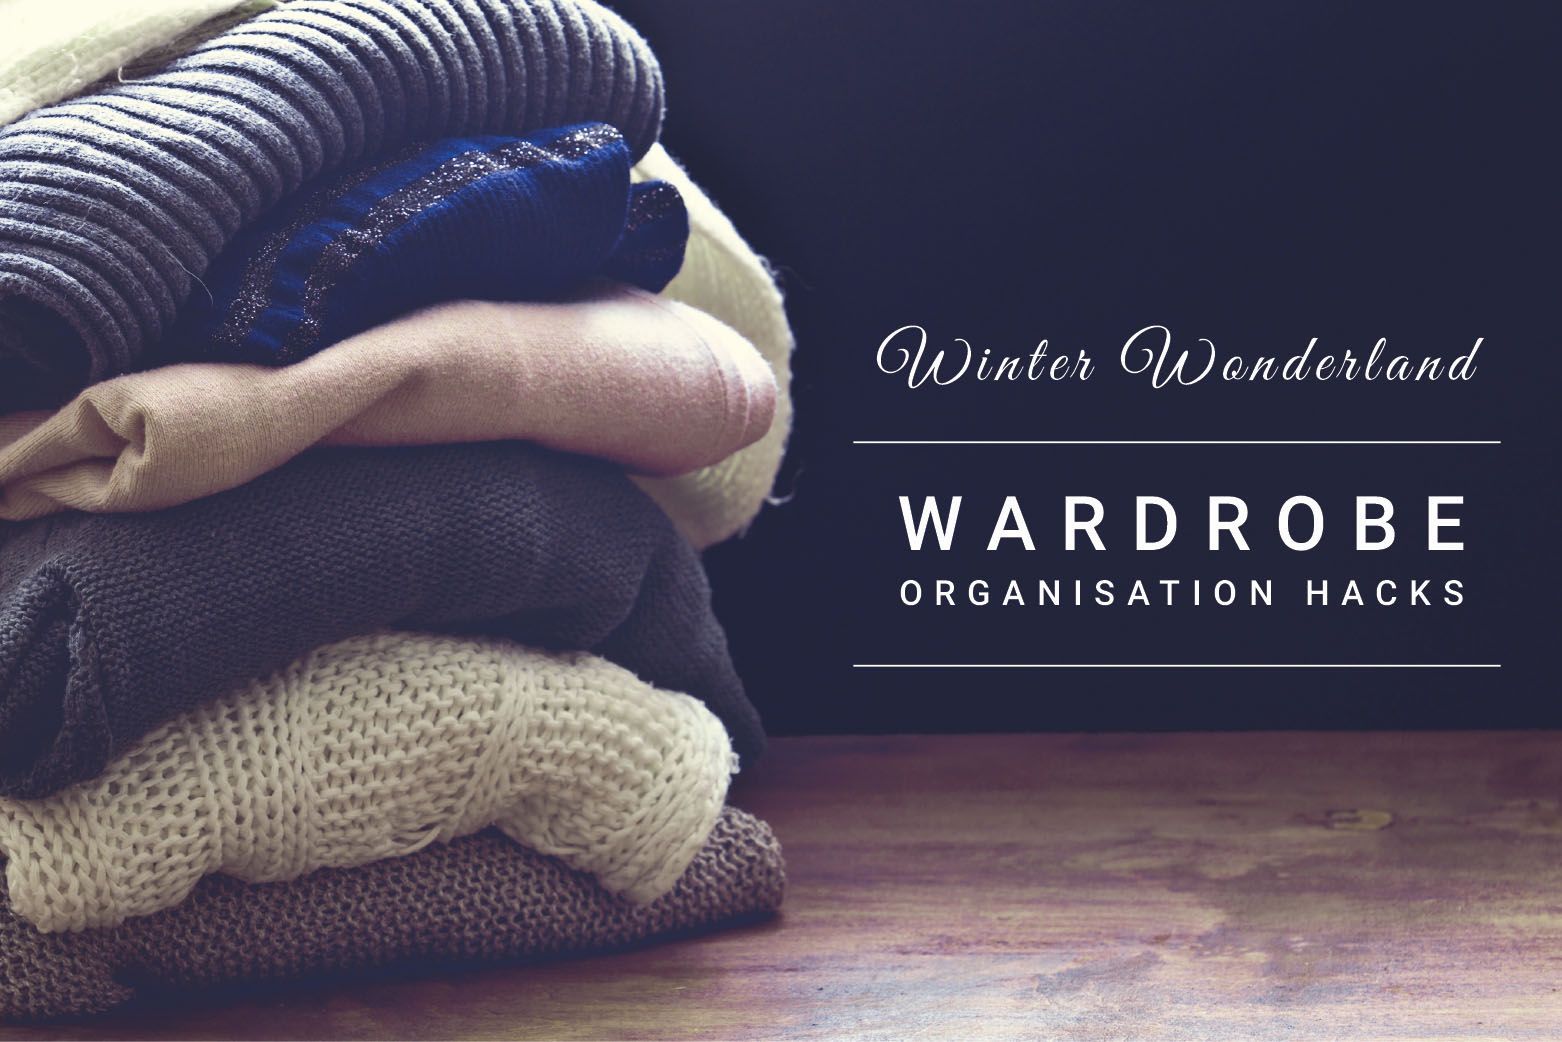 Winter Wonderland: Wardrobe Organisation Hacks